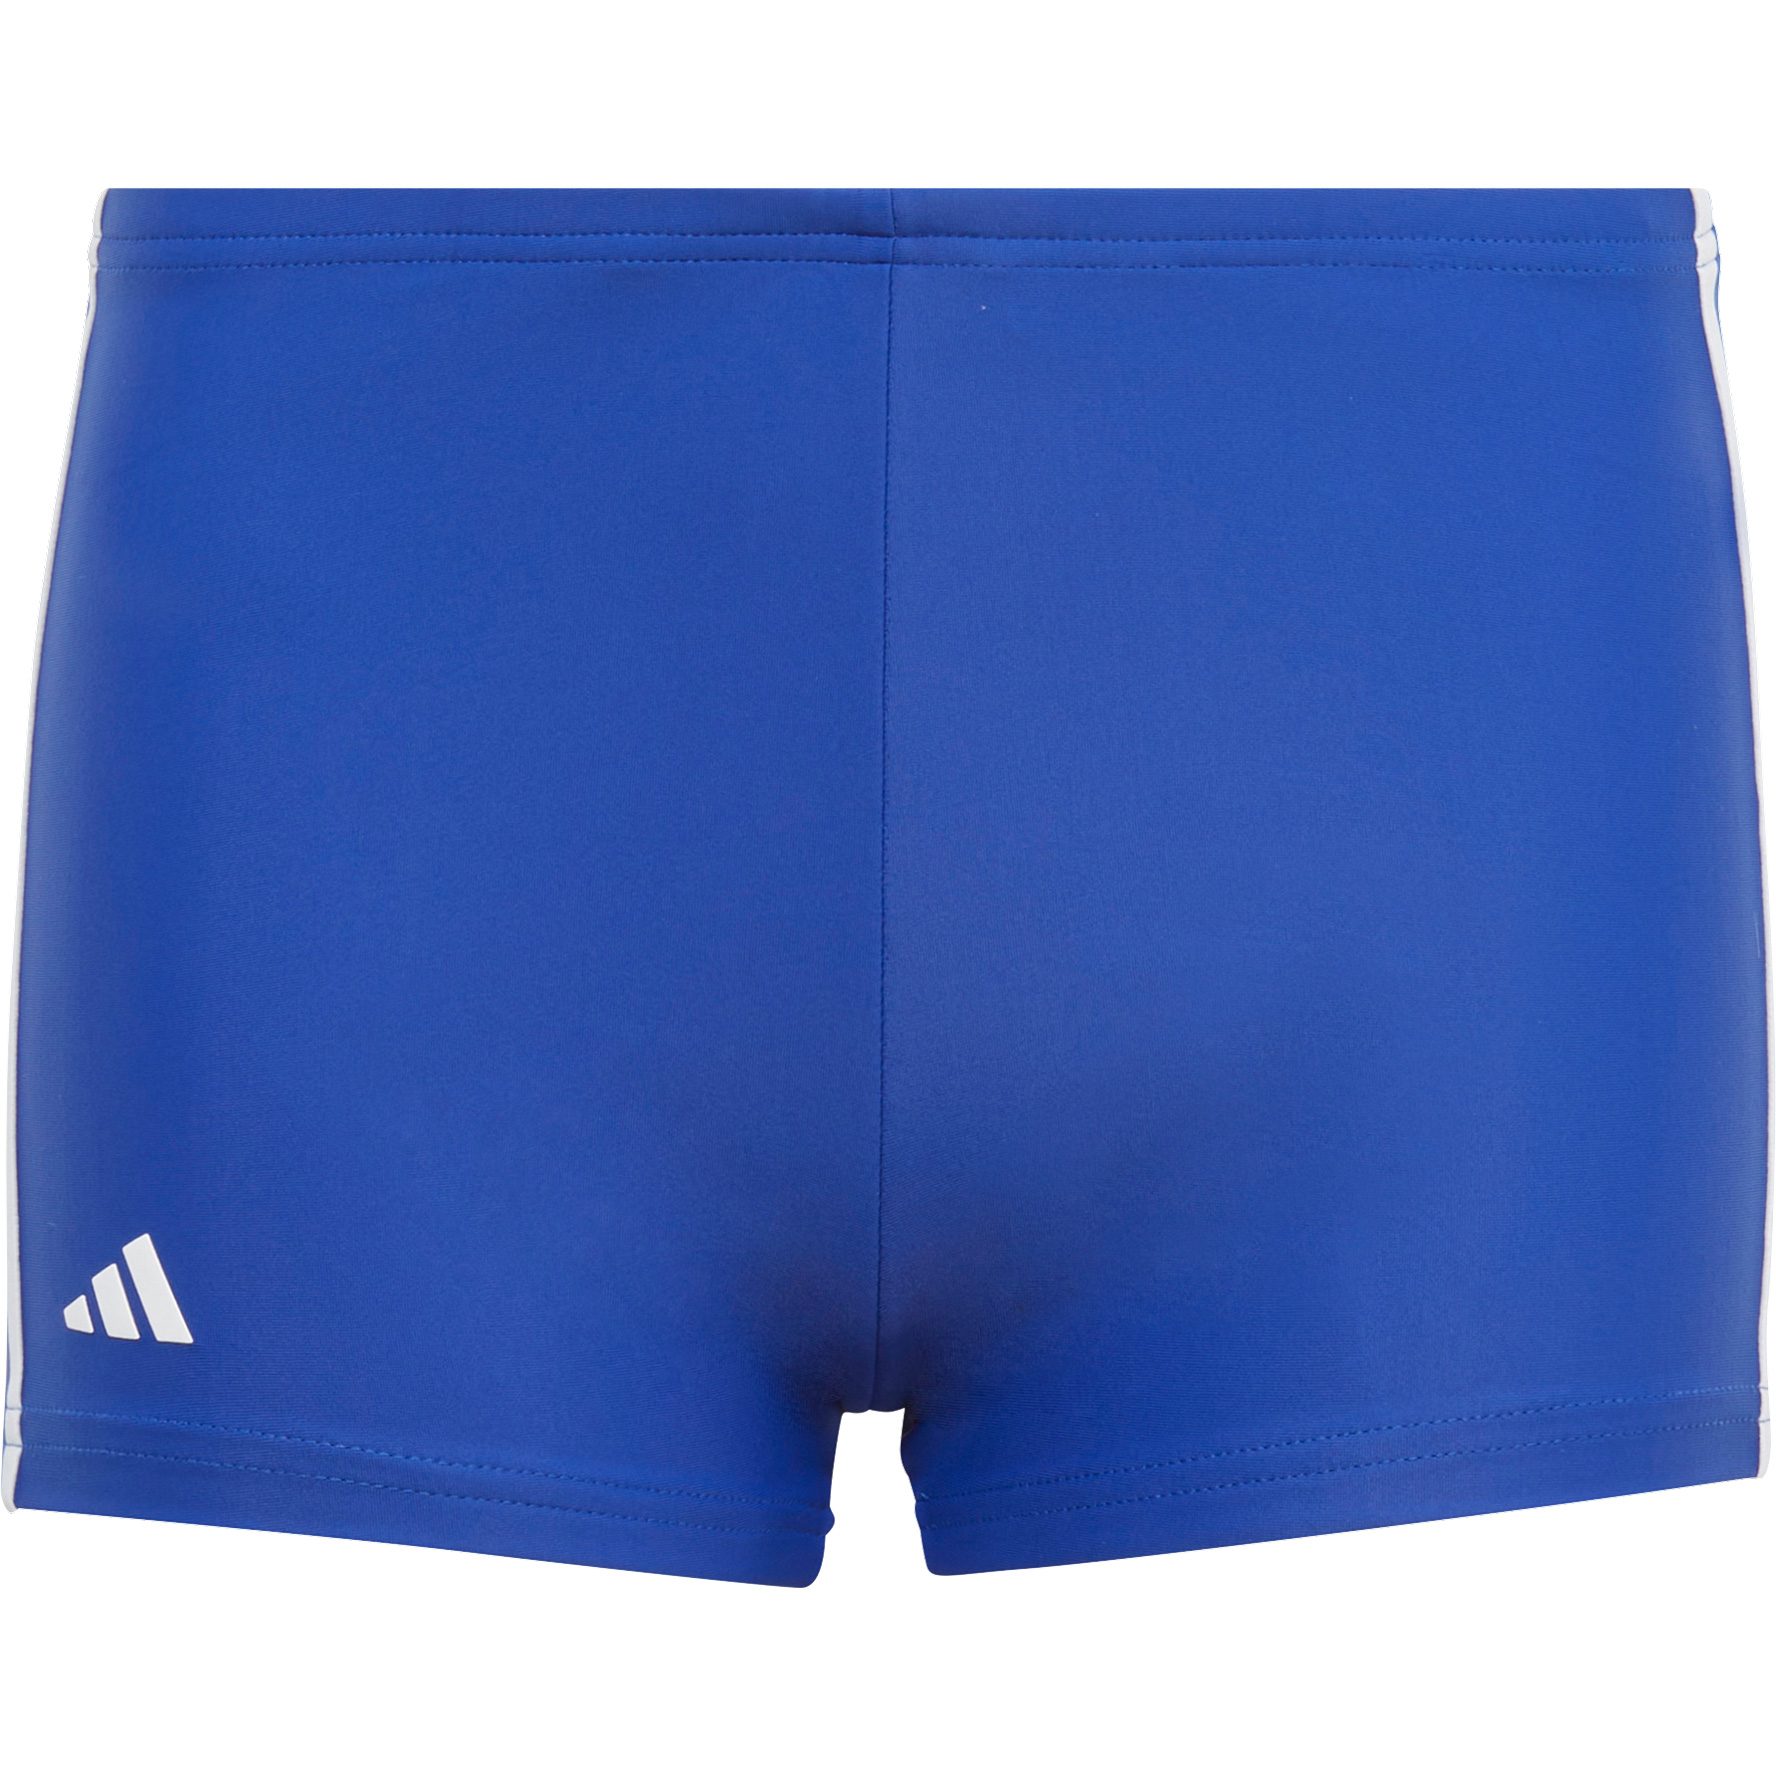 adidas - Classic Boys lucid semi Bittl Shop 3-Stripes at Swim blue Sport Boxers